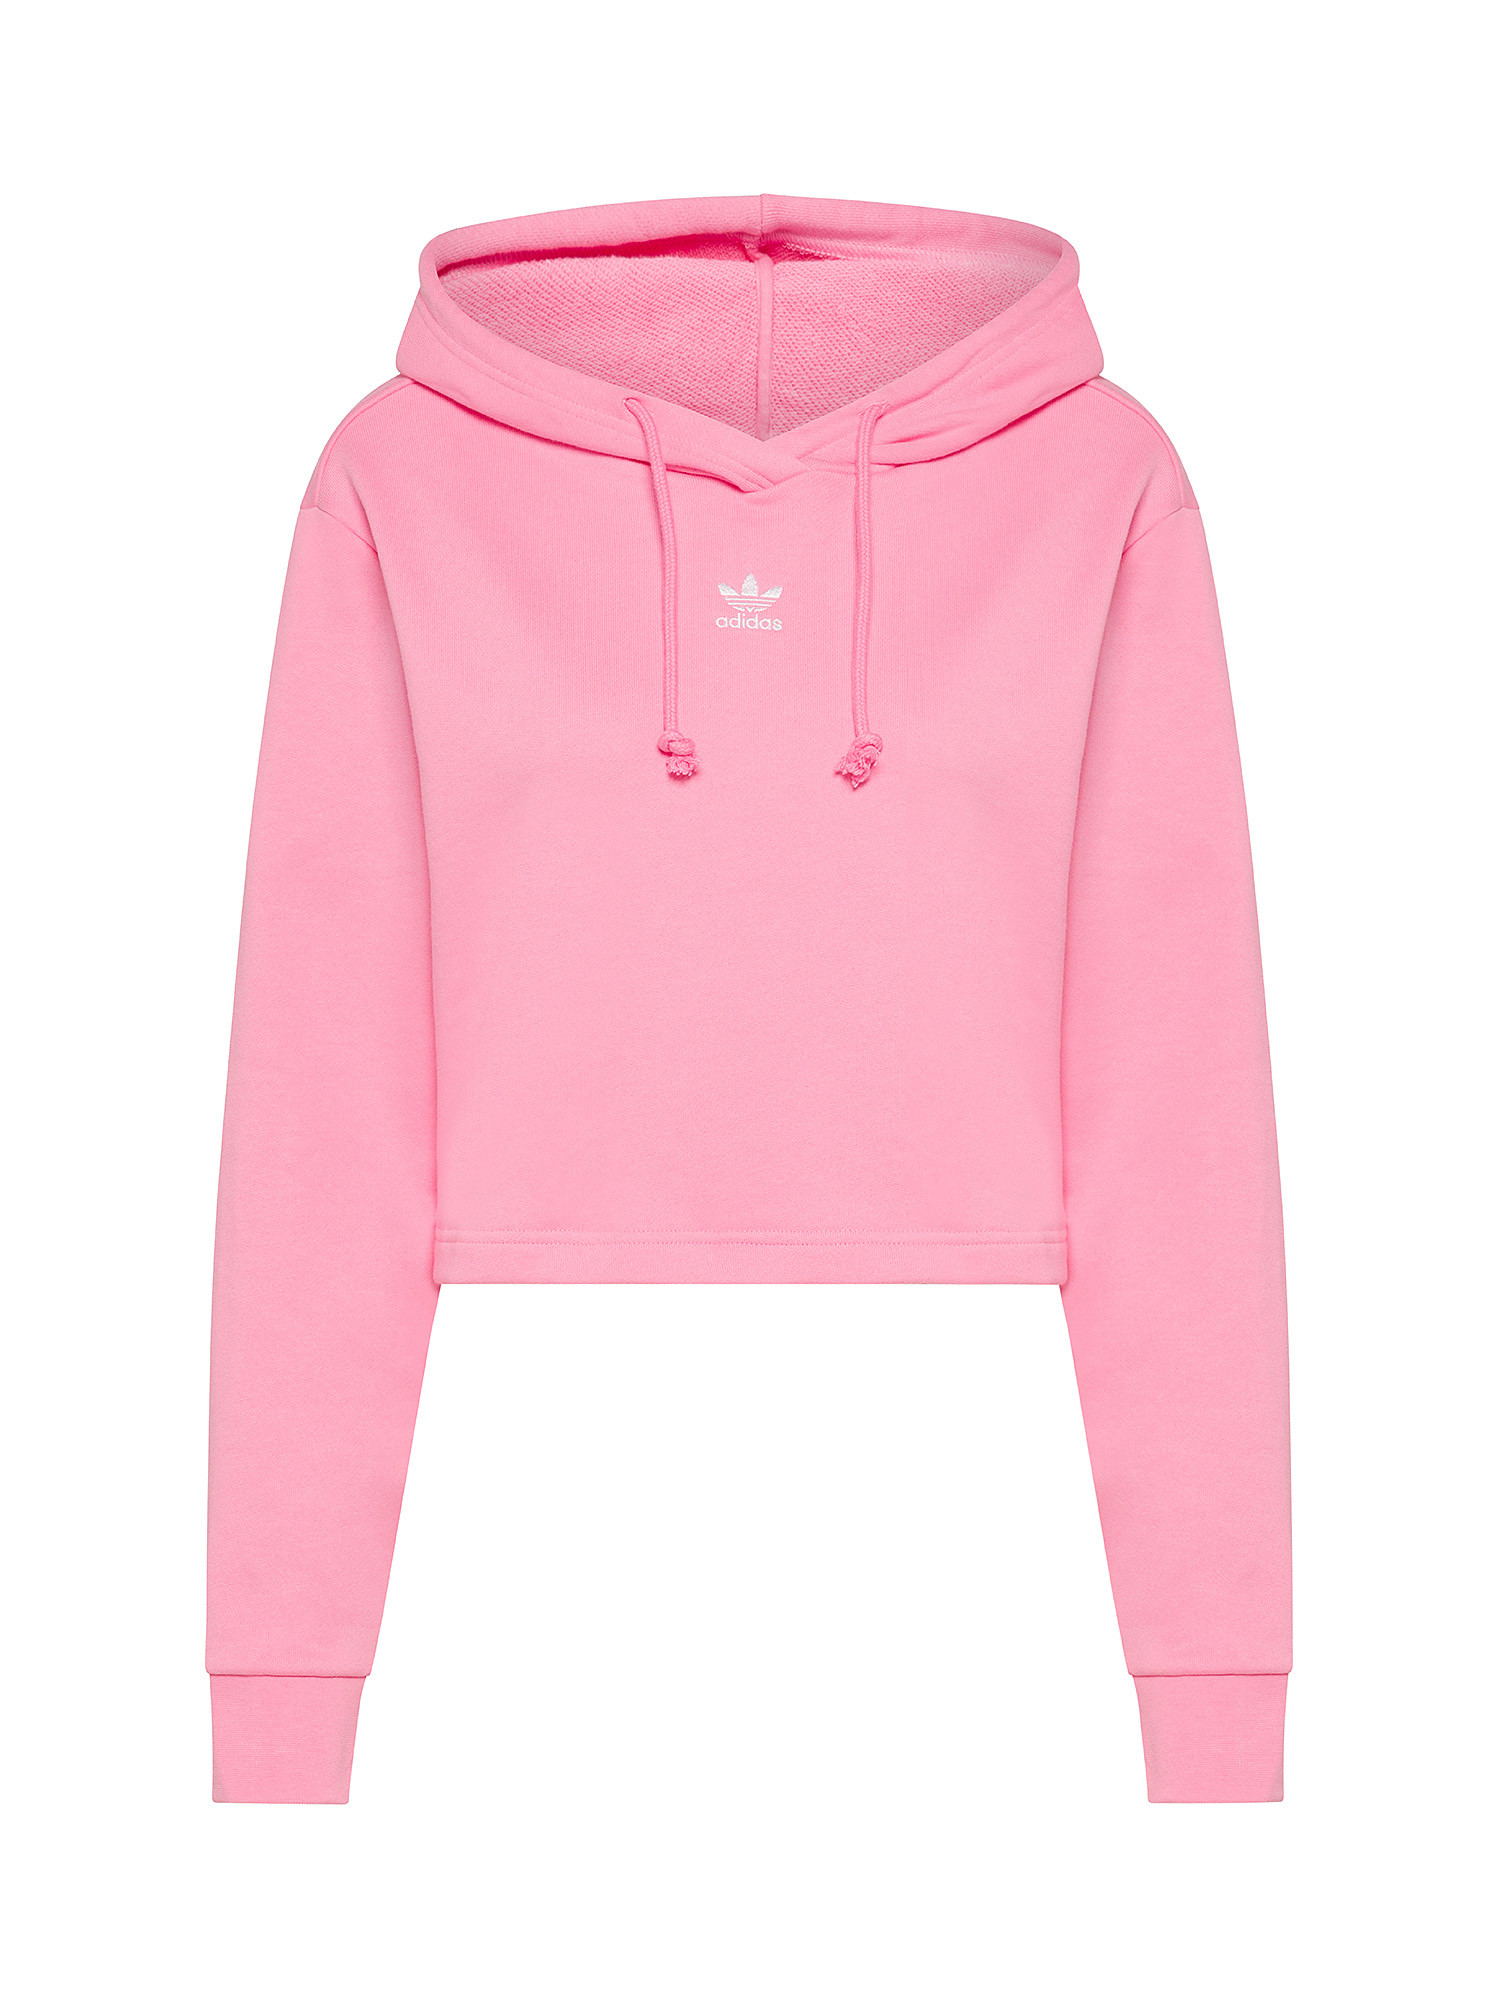 Adidas - Adicolor crop sweatshirt, Pink, large image number 0